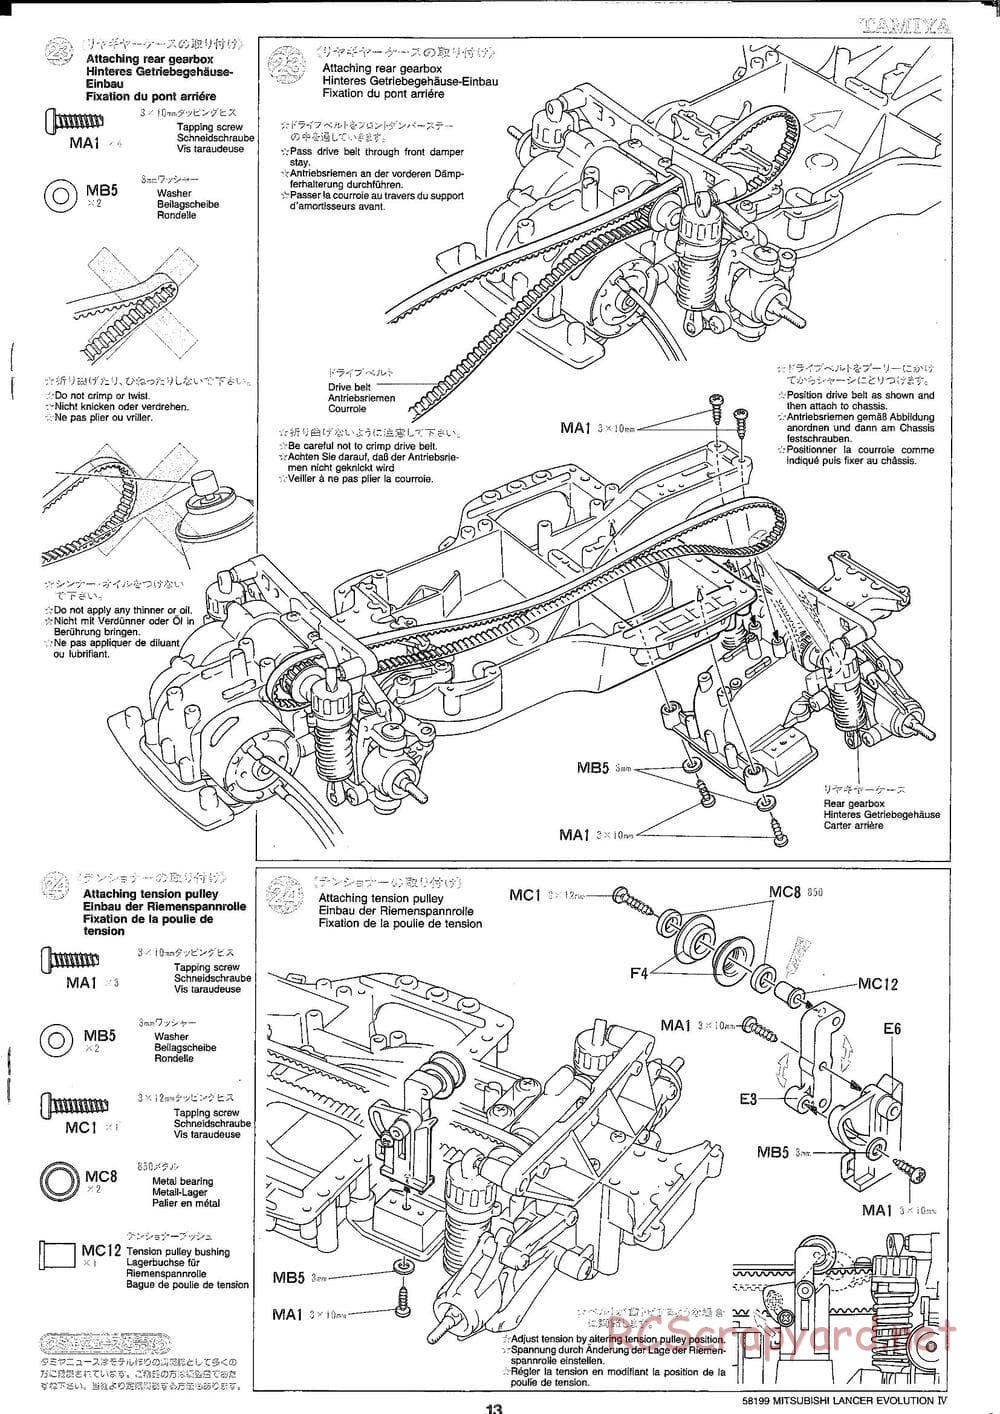 Tamiya - Mitsubishi Lancer Evolution IV - TA-03F Chassis - Manual - Page 13